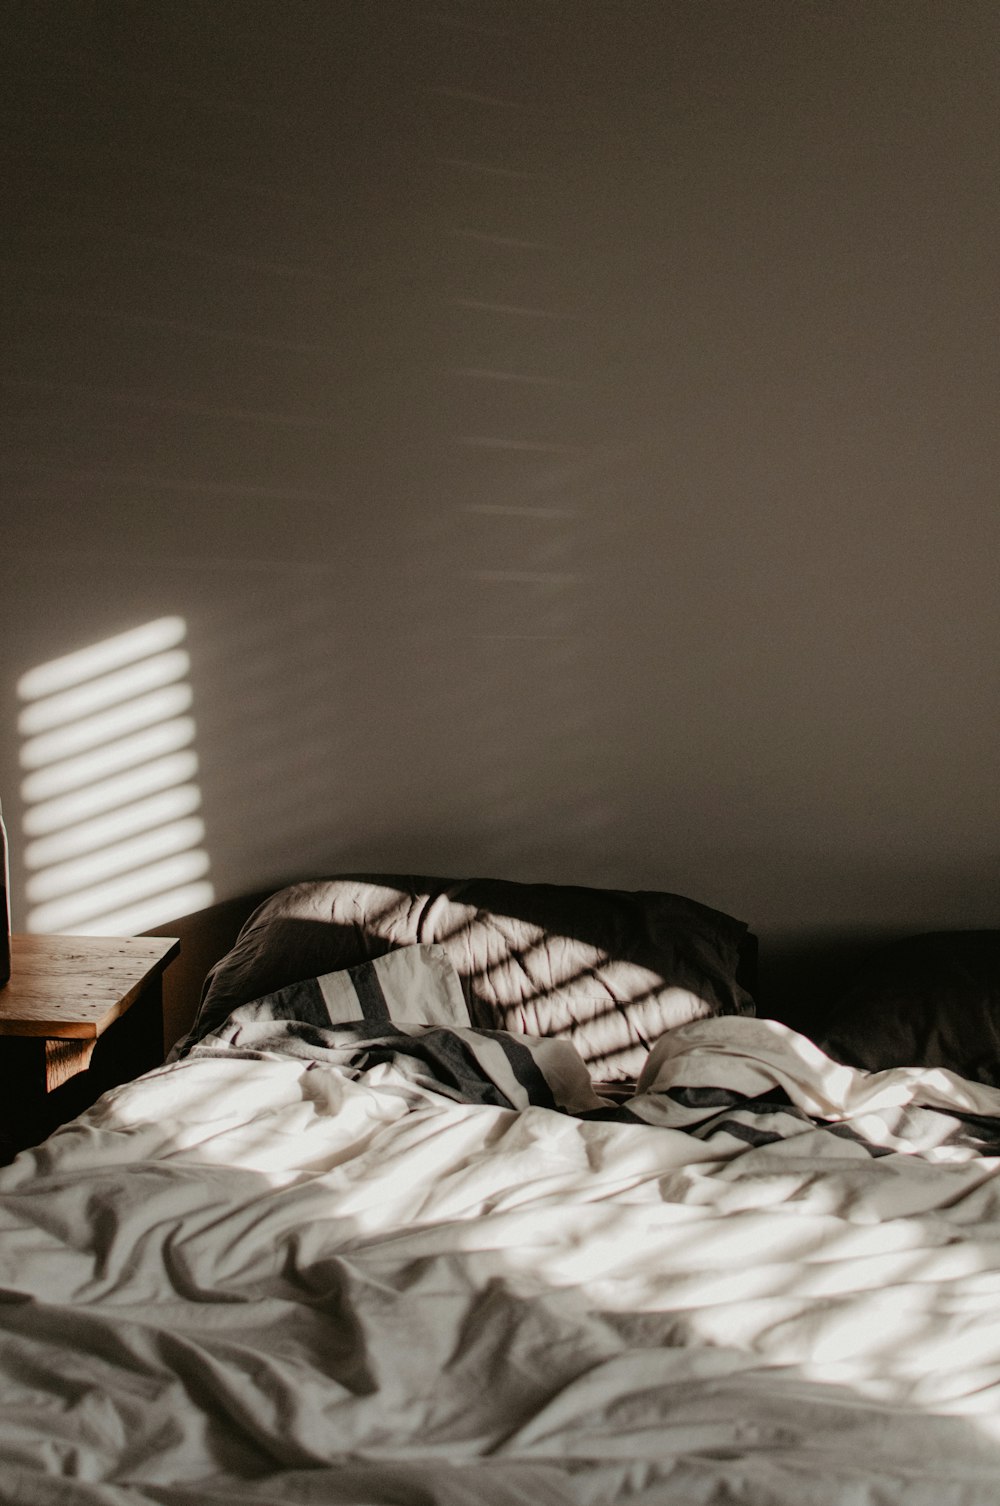 sunlight inside bed